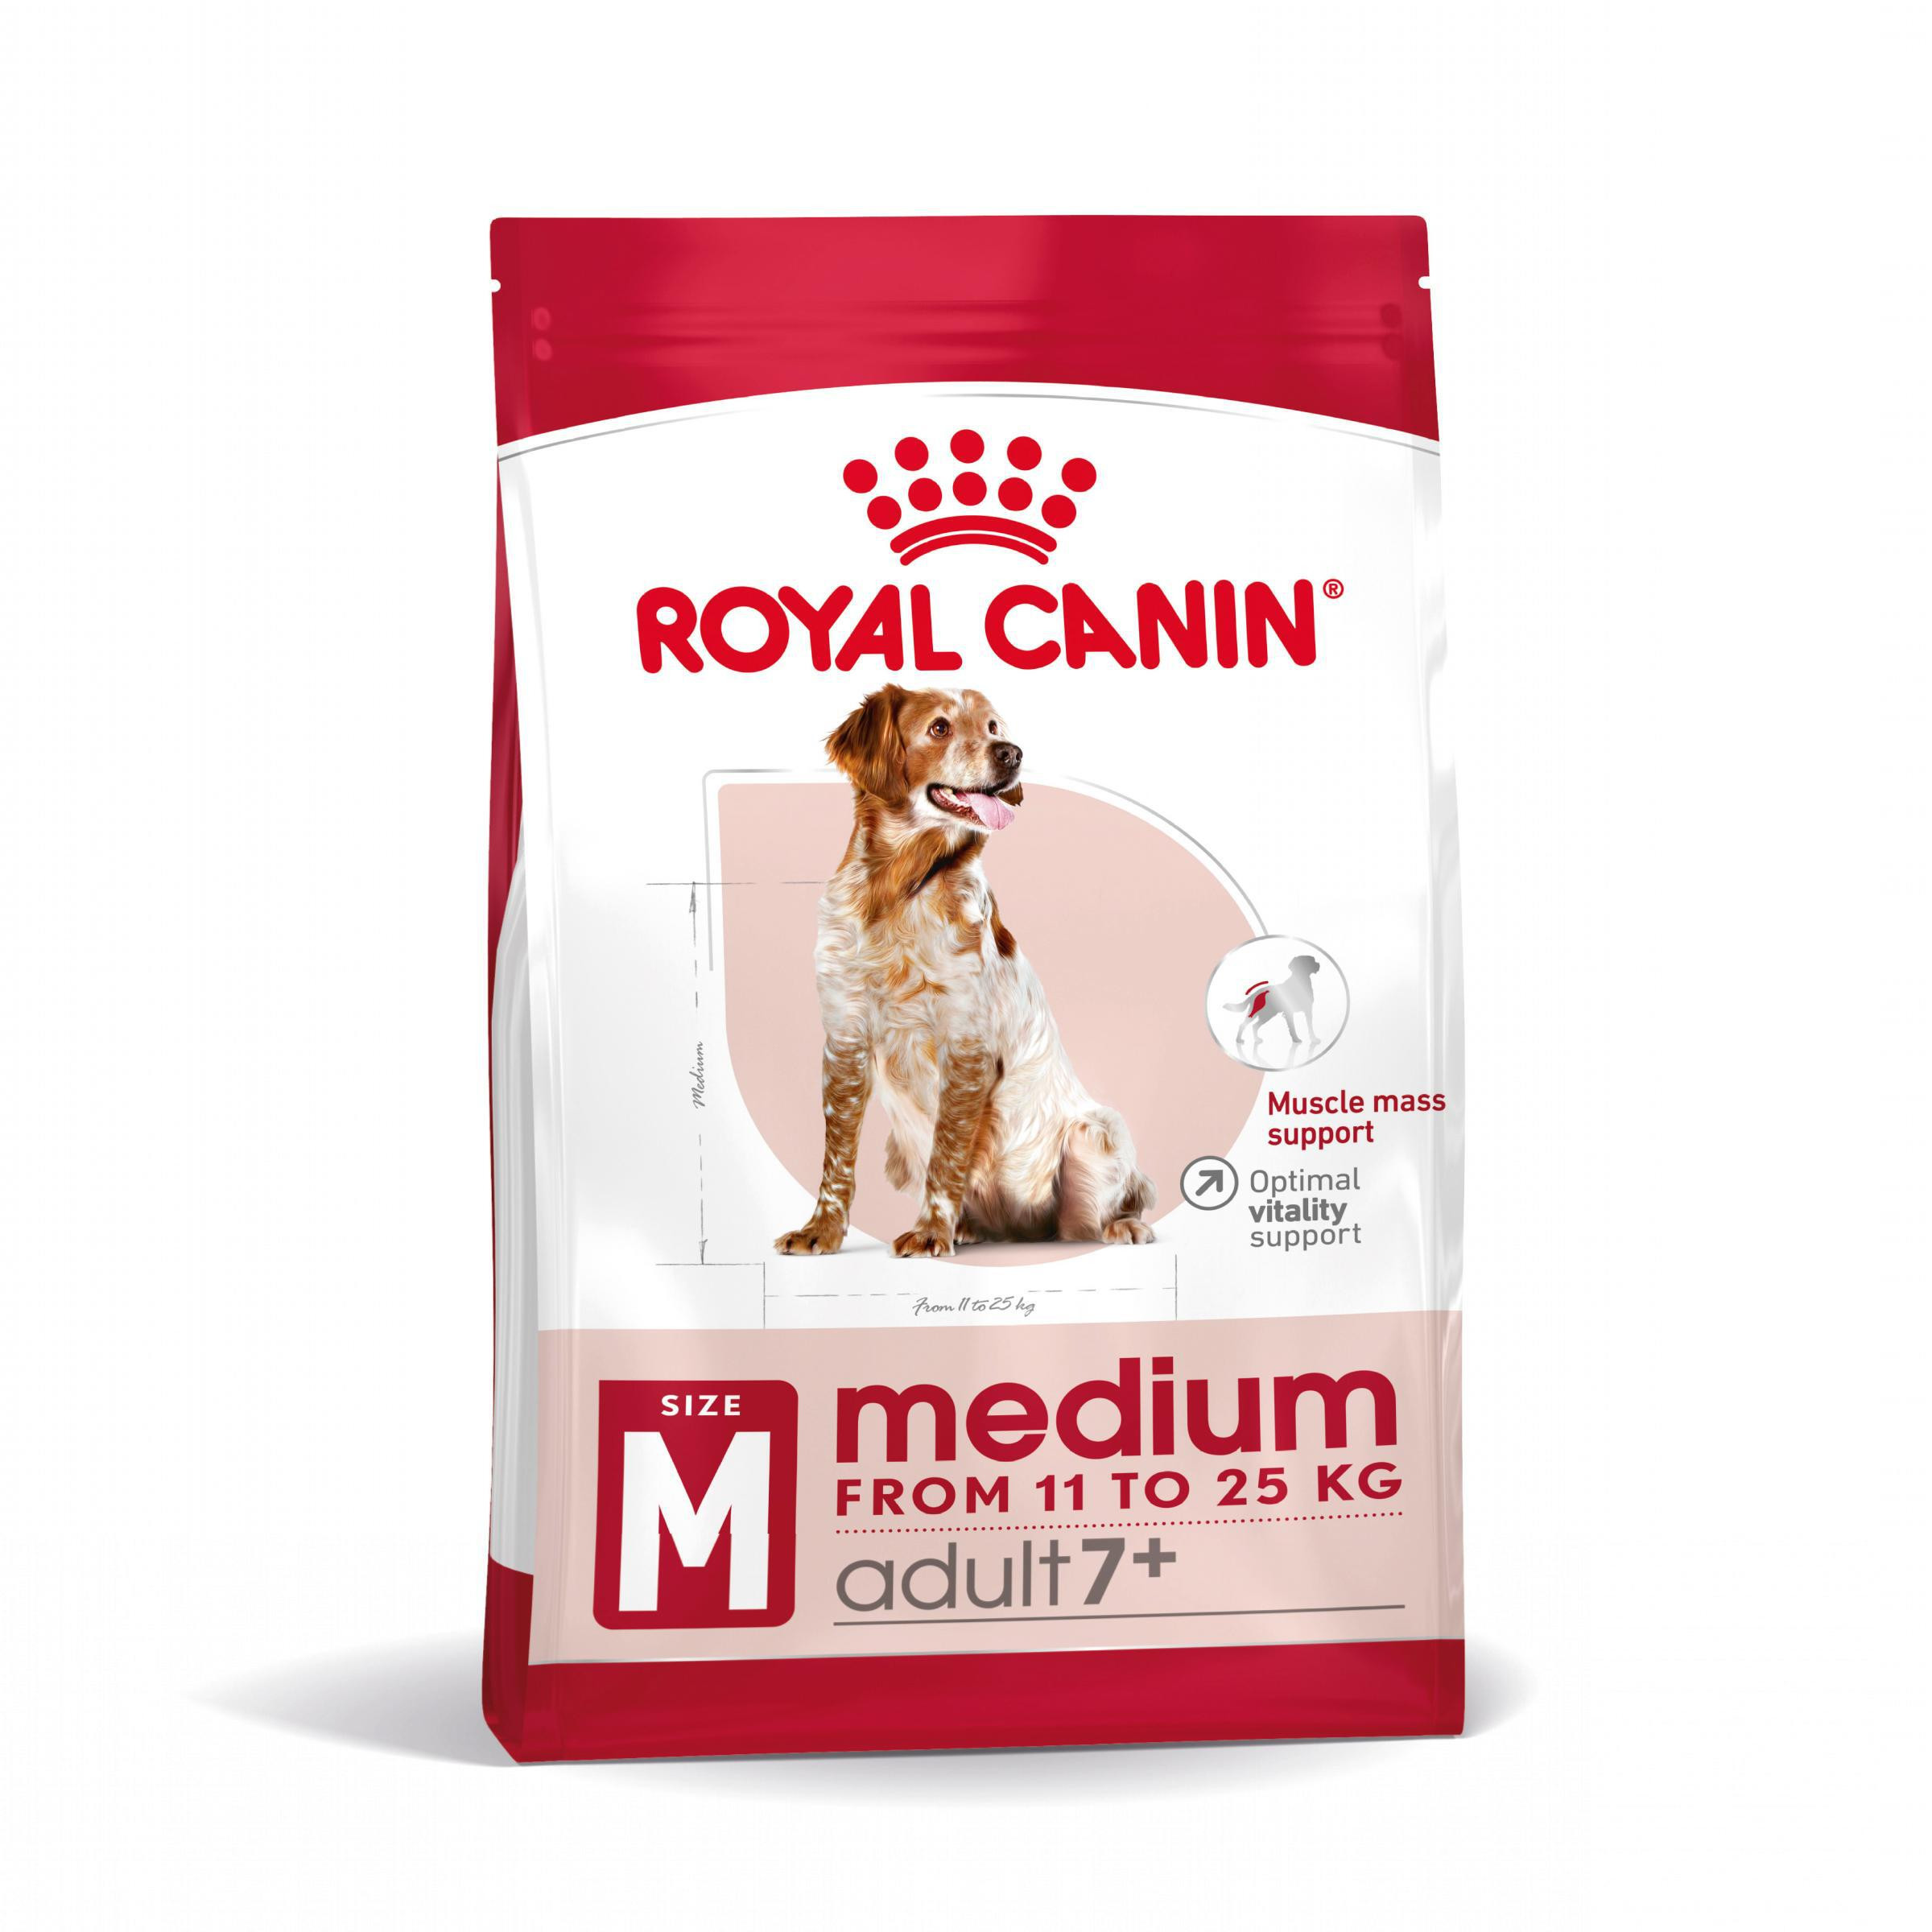 Royal Canin Medium Adult 7+ hundefoder